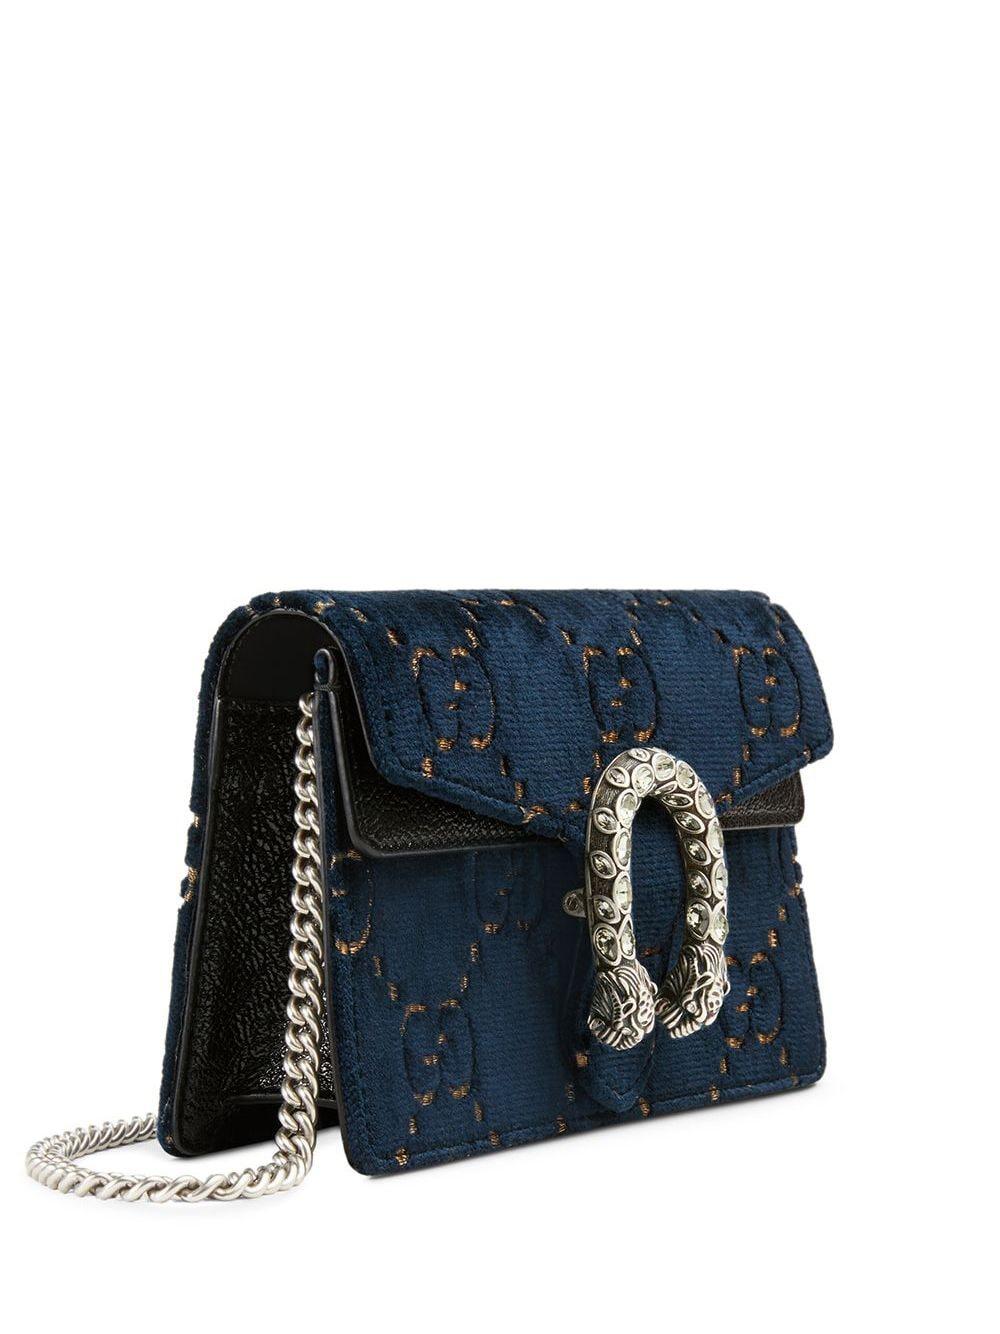 Gucci Dionysus GG Velvet Super Mini Bag in Navy (Blue) - Lyst